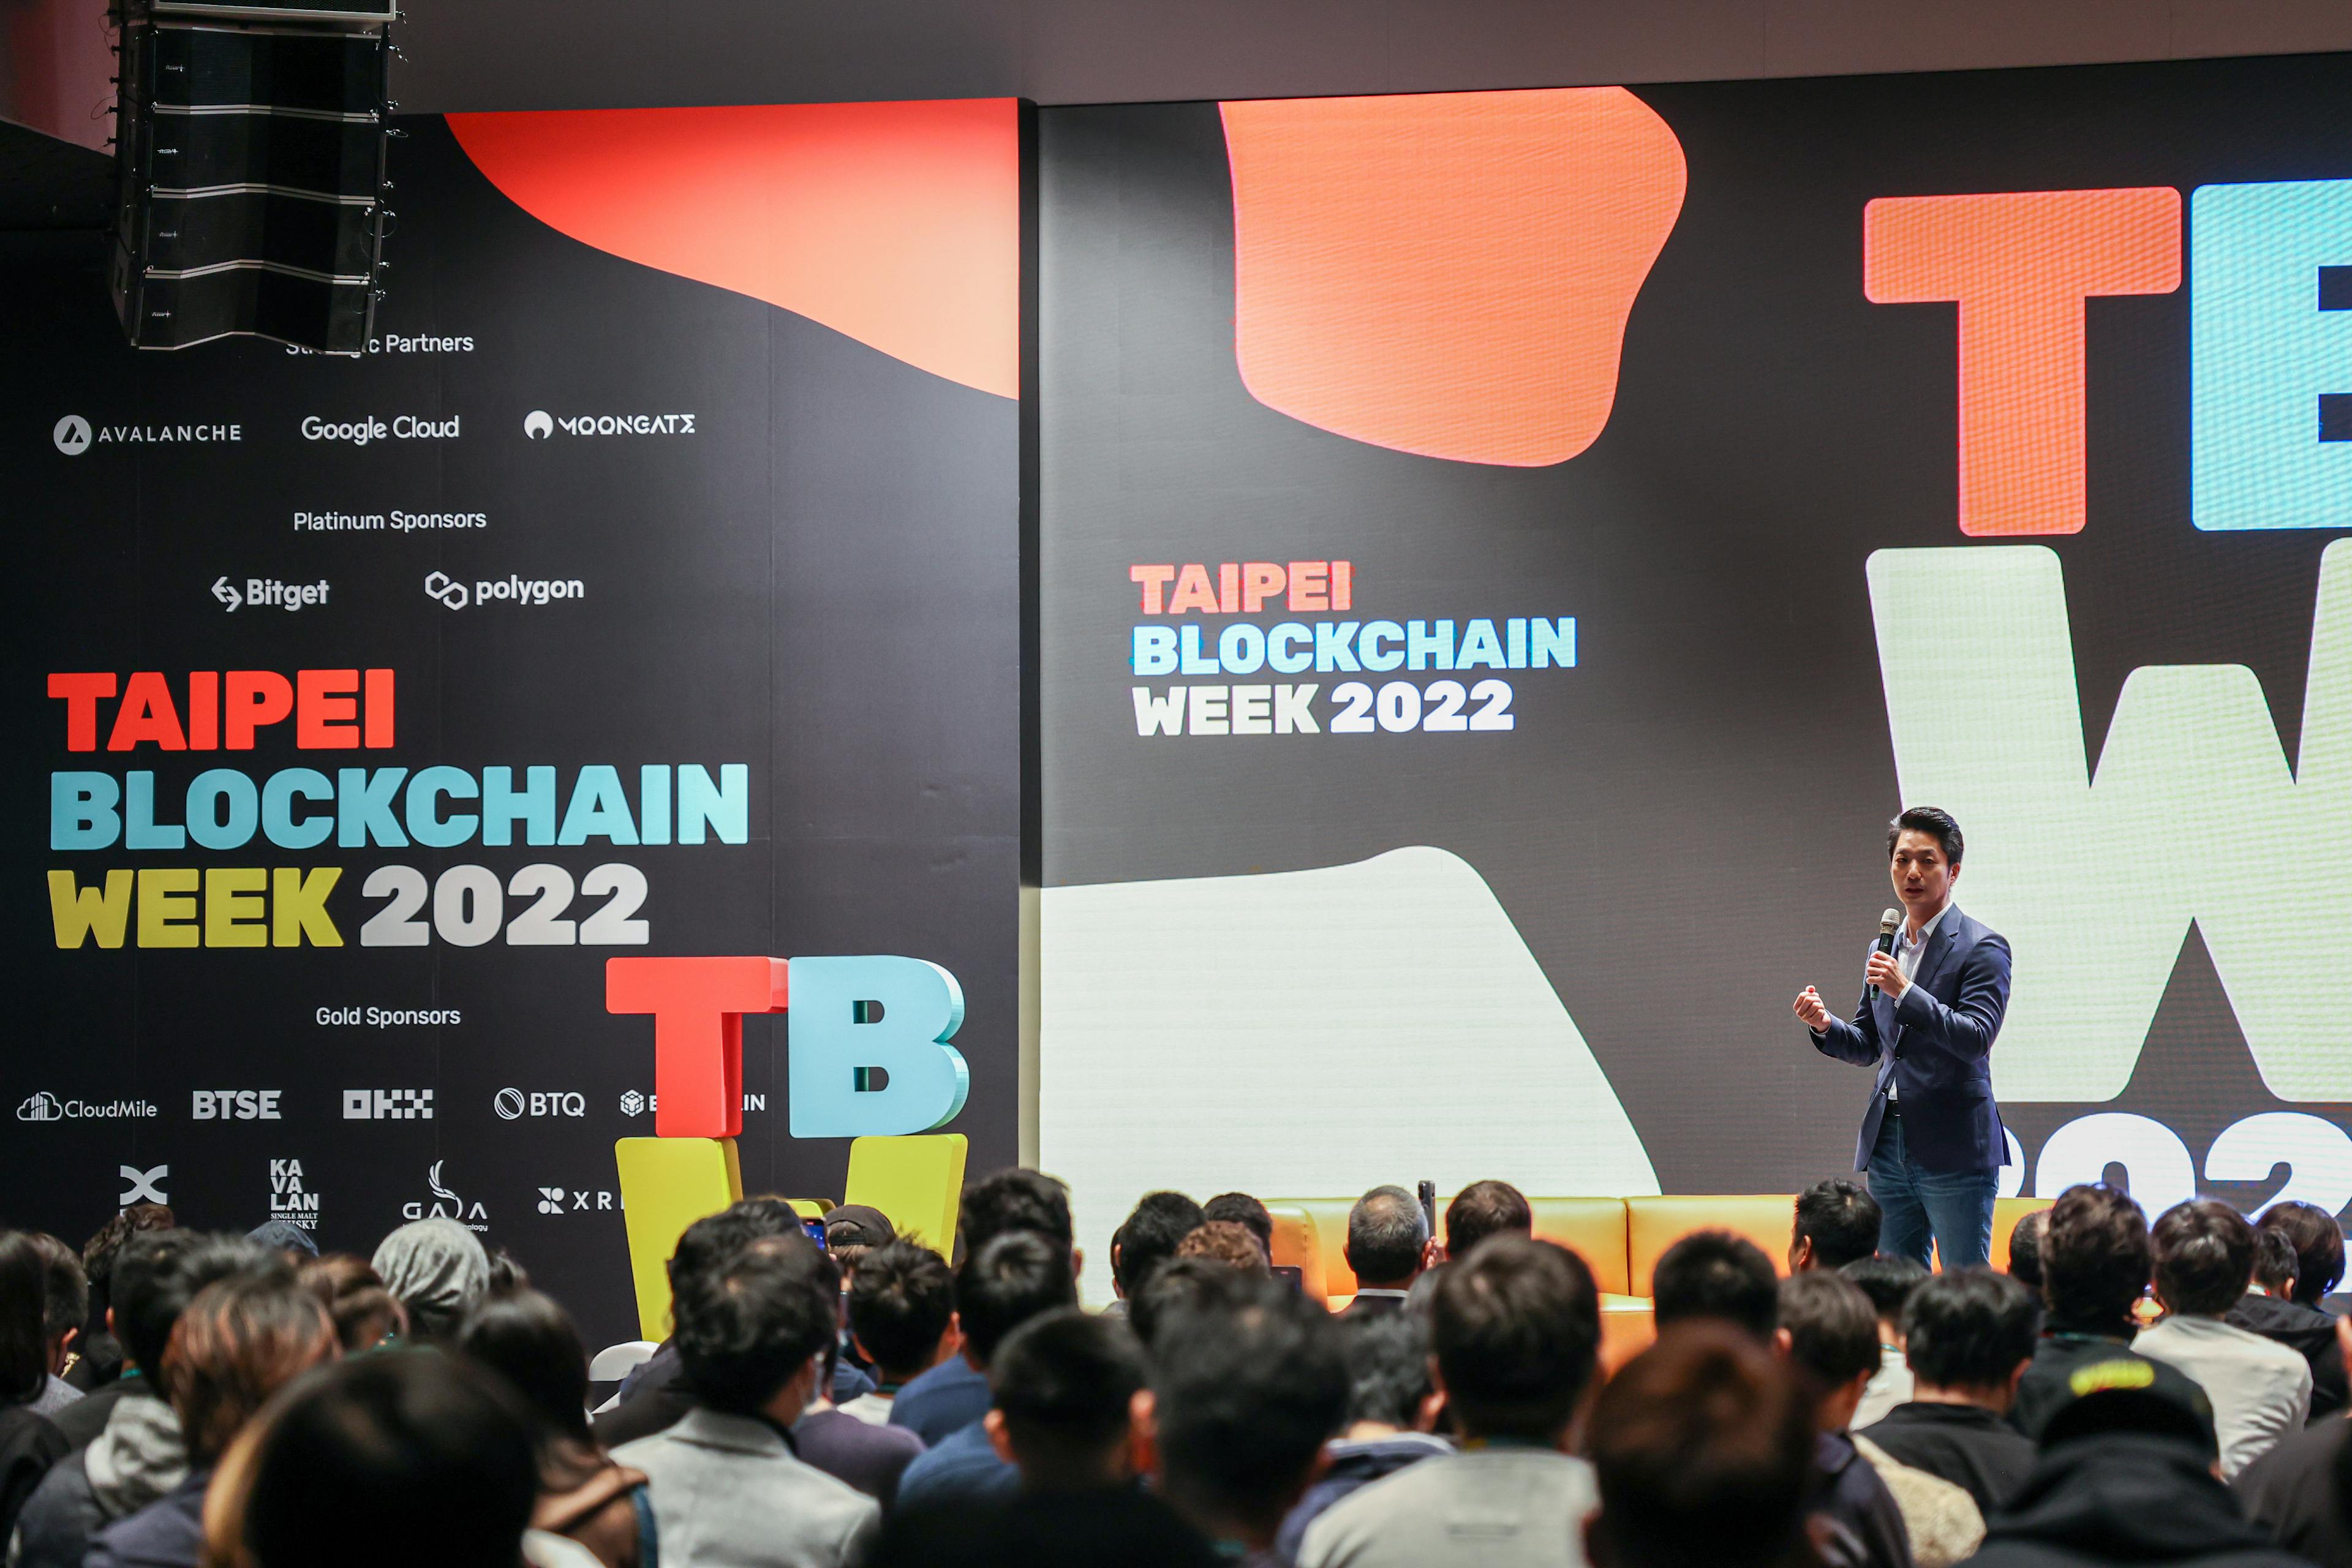 The mayor of Taipei City, Chiang Wan-an, giving an inspirational opening speech at Taipei Blockchain Week.